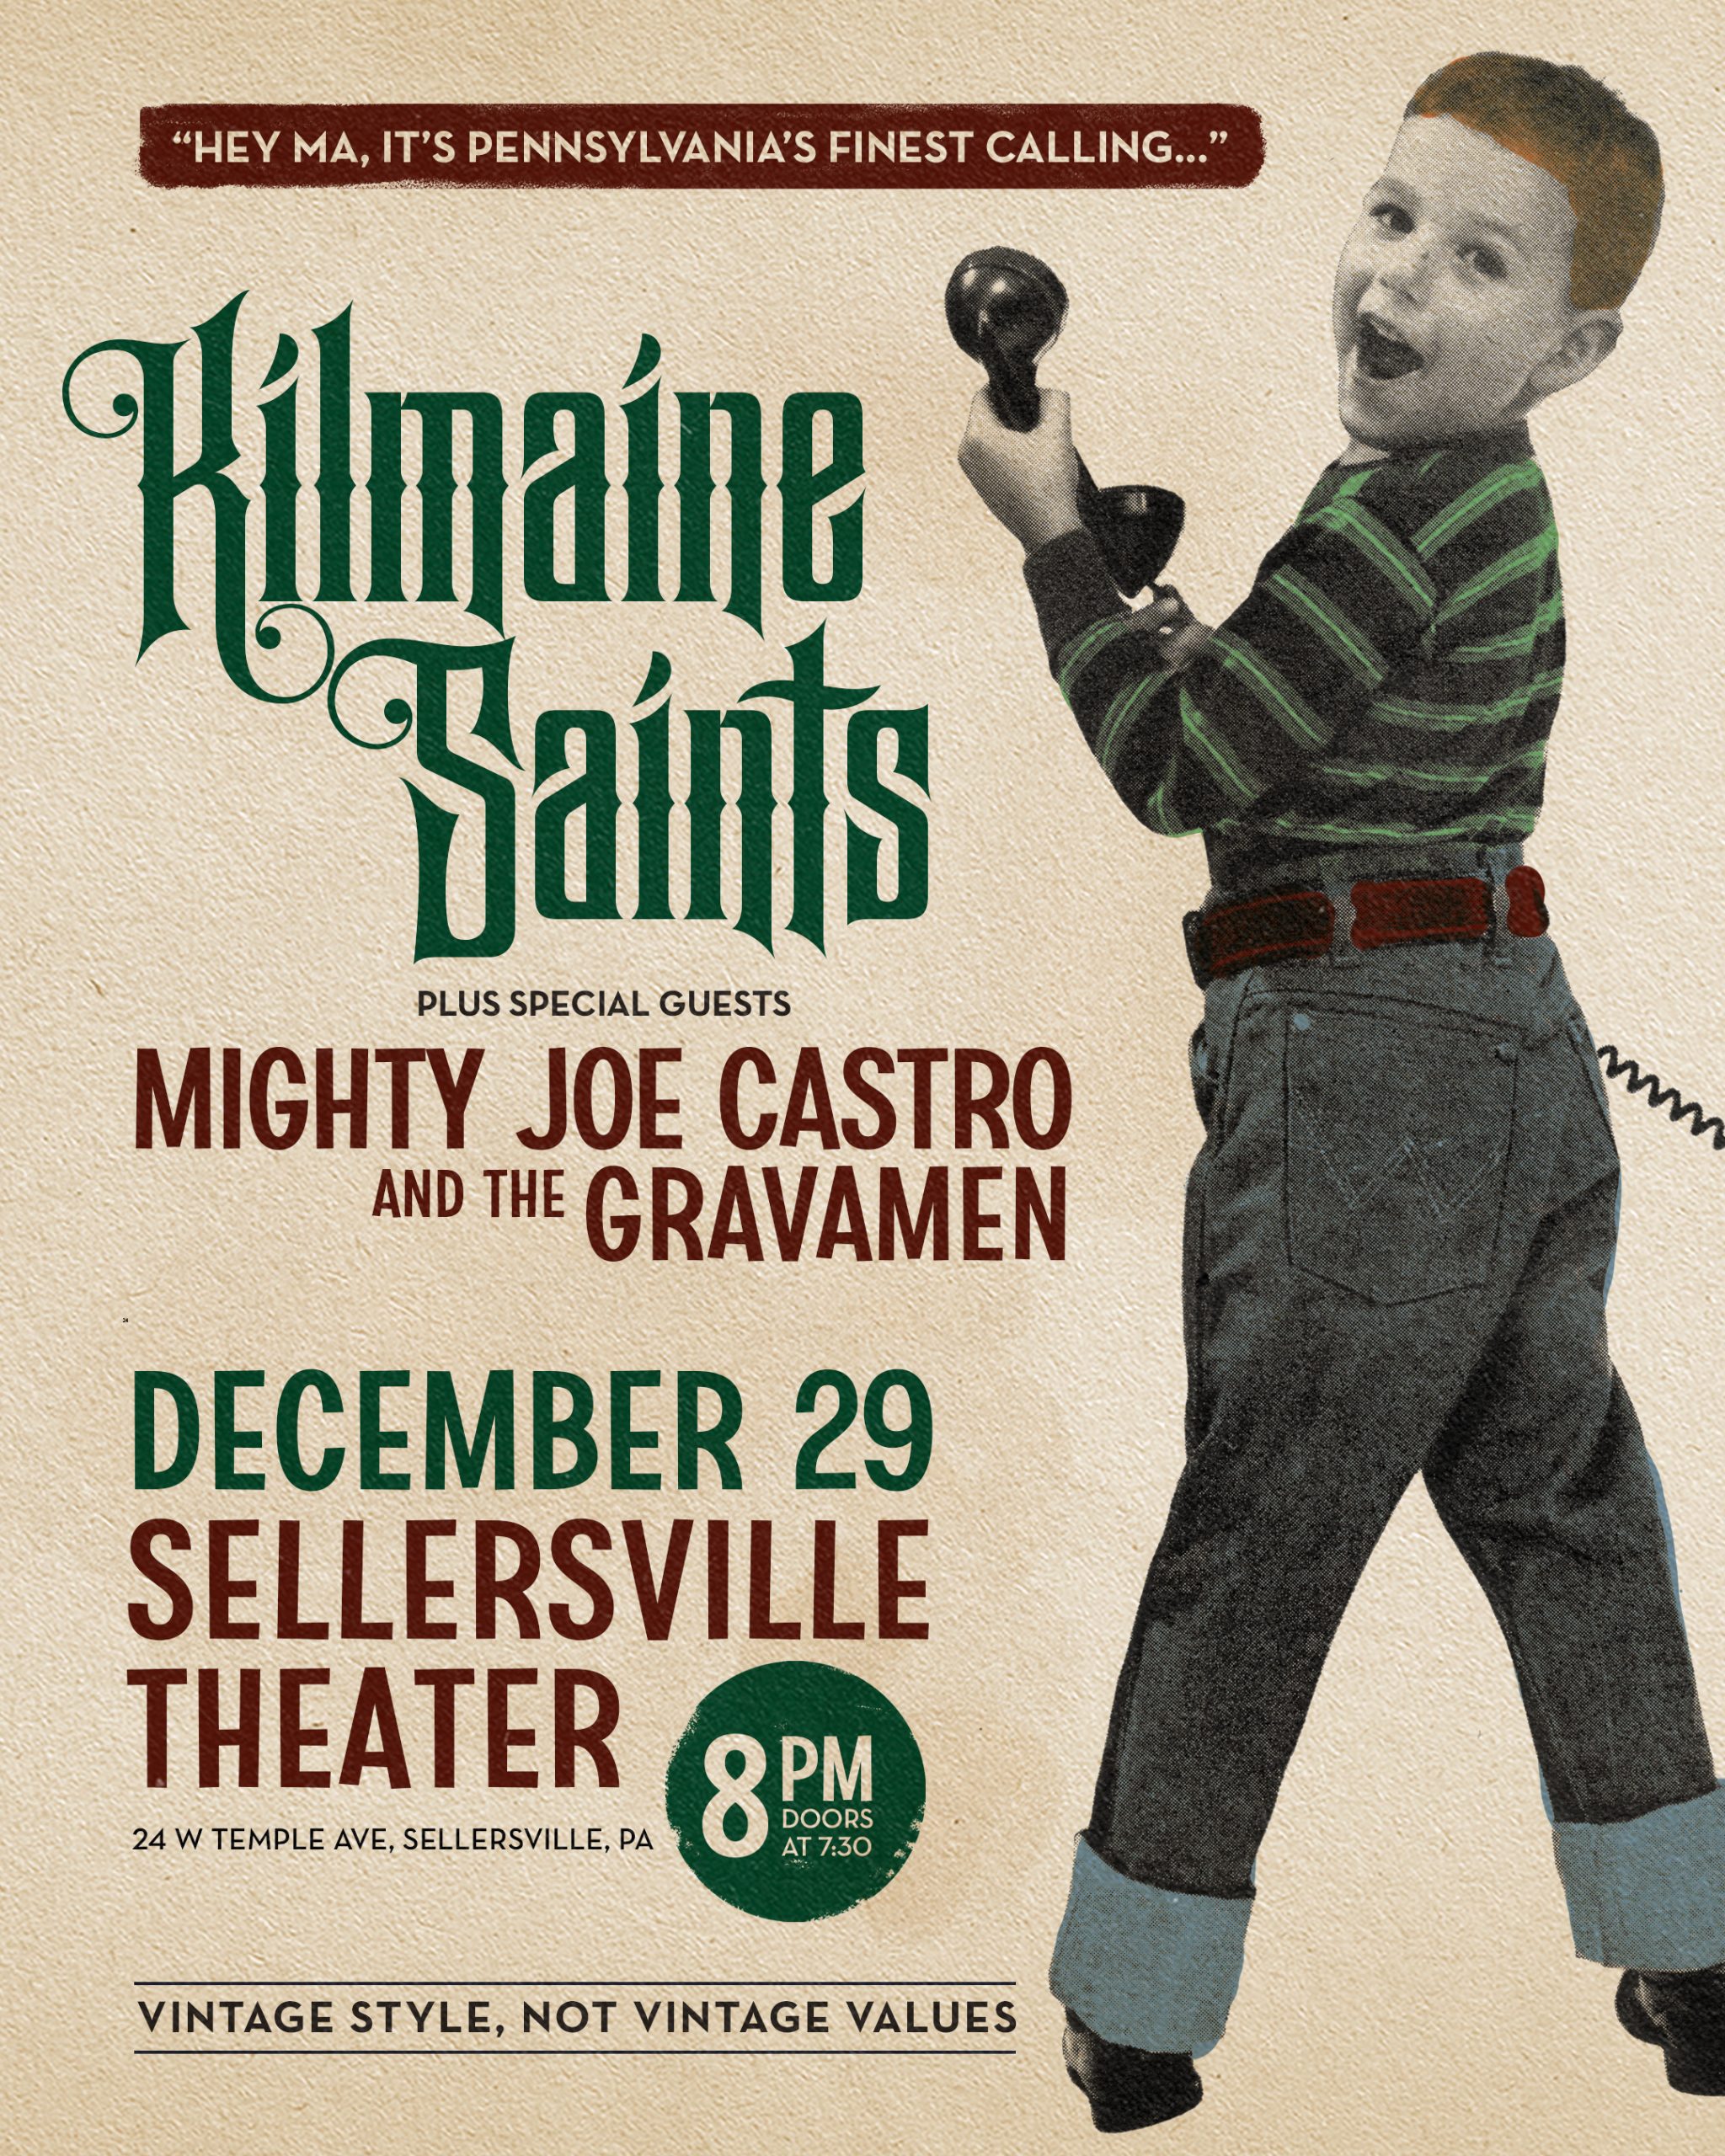 Mighty Joe Castro and the Gravamen open for Kilmaine Saints at the Sellersville Theater